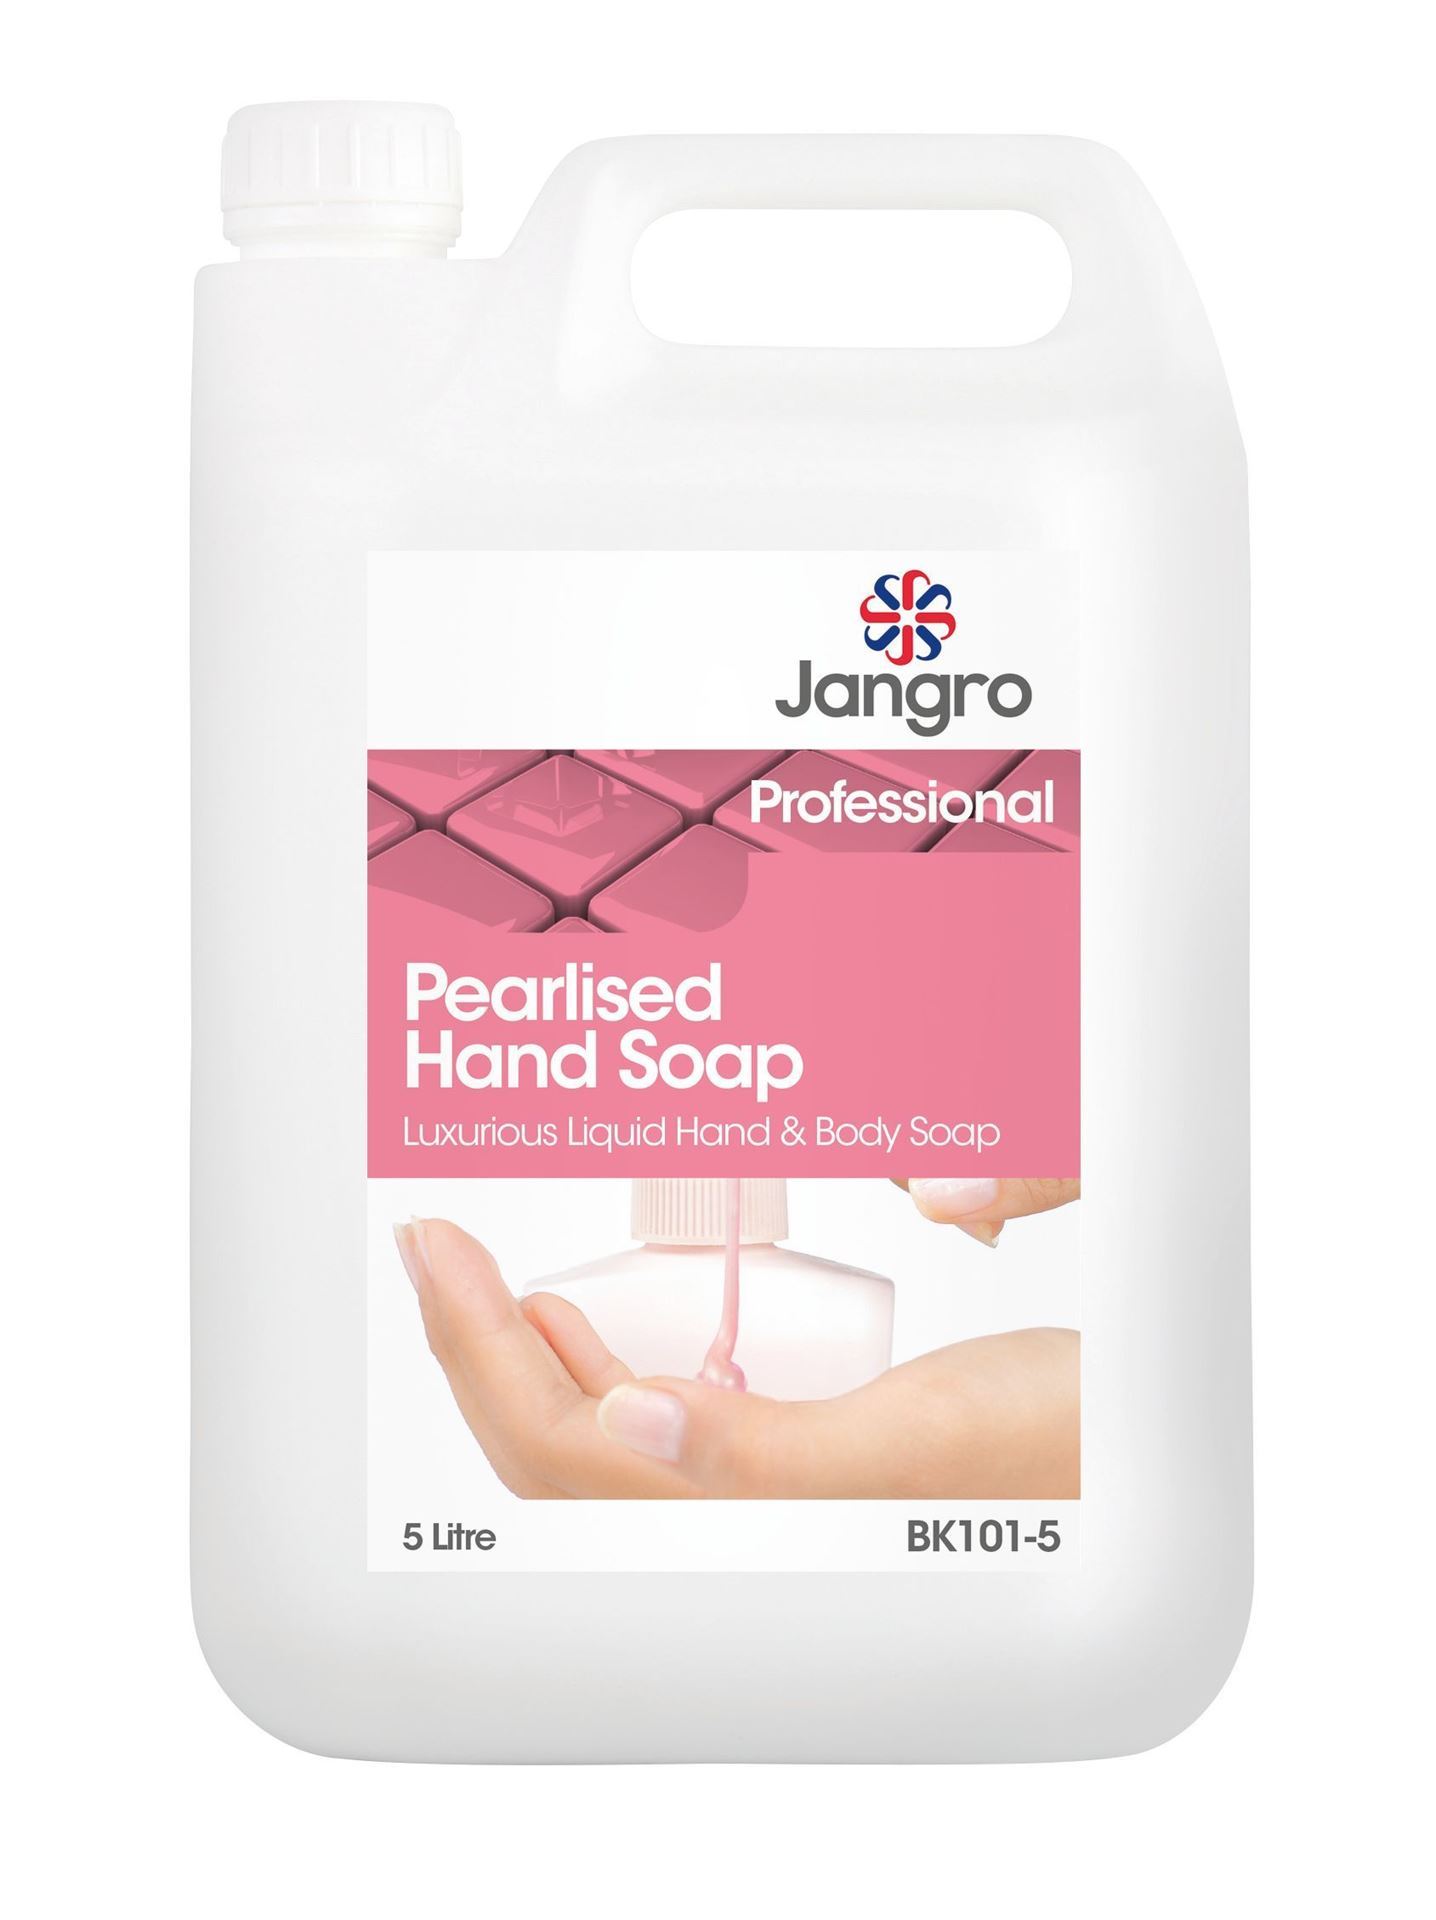 Jangro Pink Pearlised Hand Soap - 5 Litre C125 - C225-5LX2